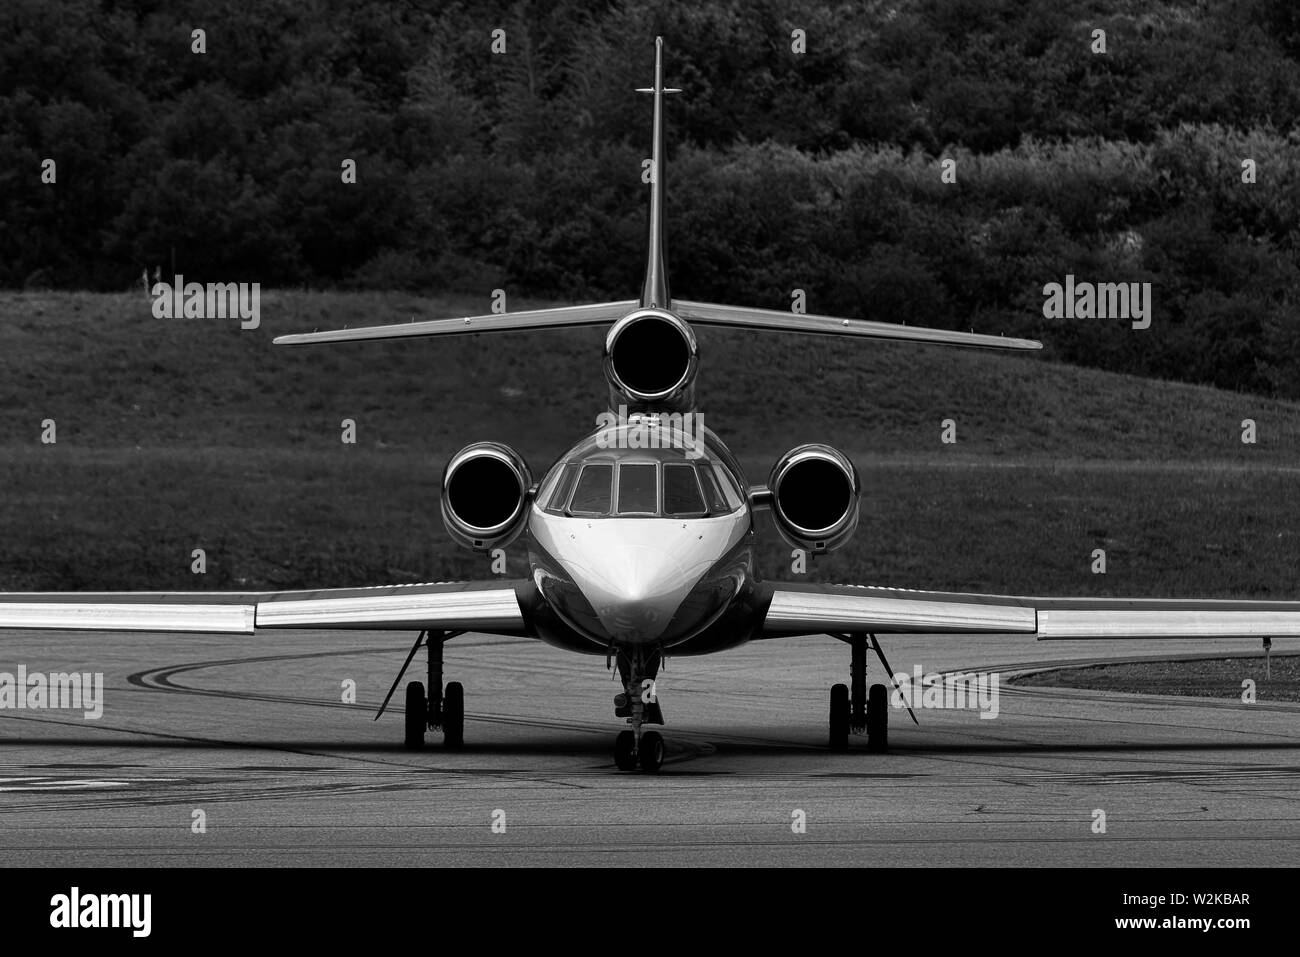 Dassault 900 gerade in Aspen/Pitkin County Airport gelandet Stockfoto